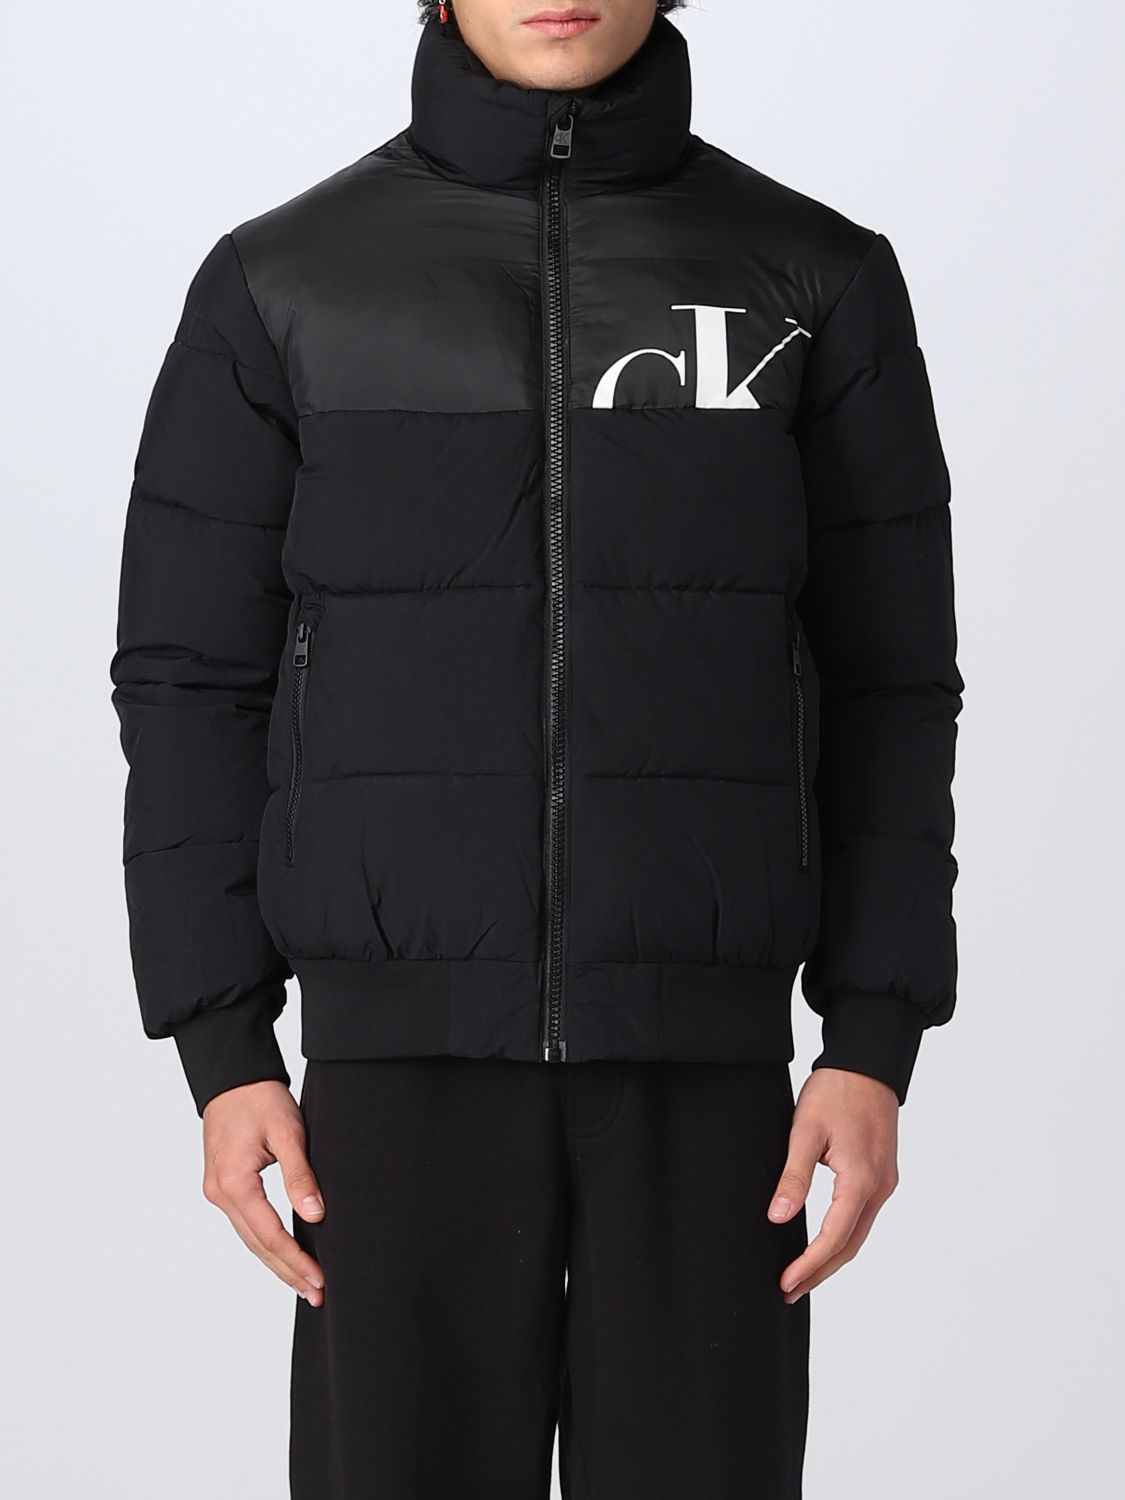 CALVIN KLEIN JEANS: jacket for man - Black | Calvin Klein Jeans jacket ...